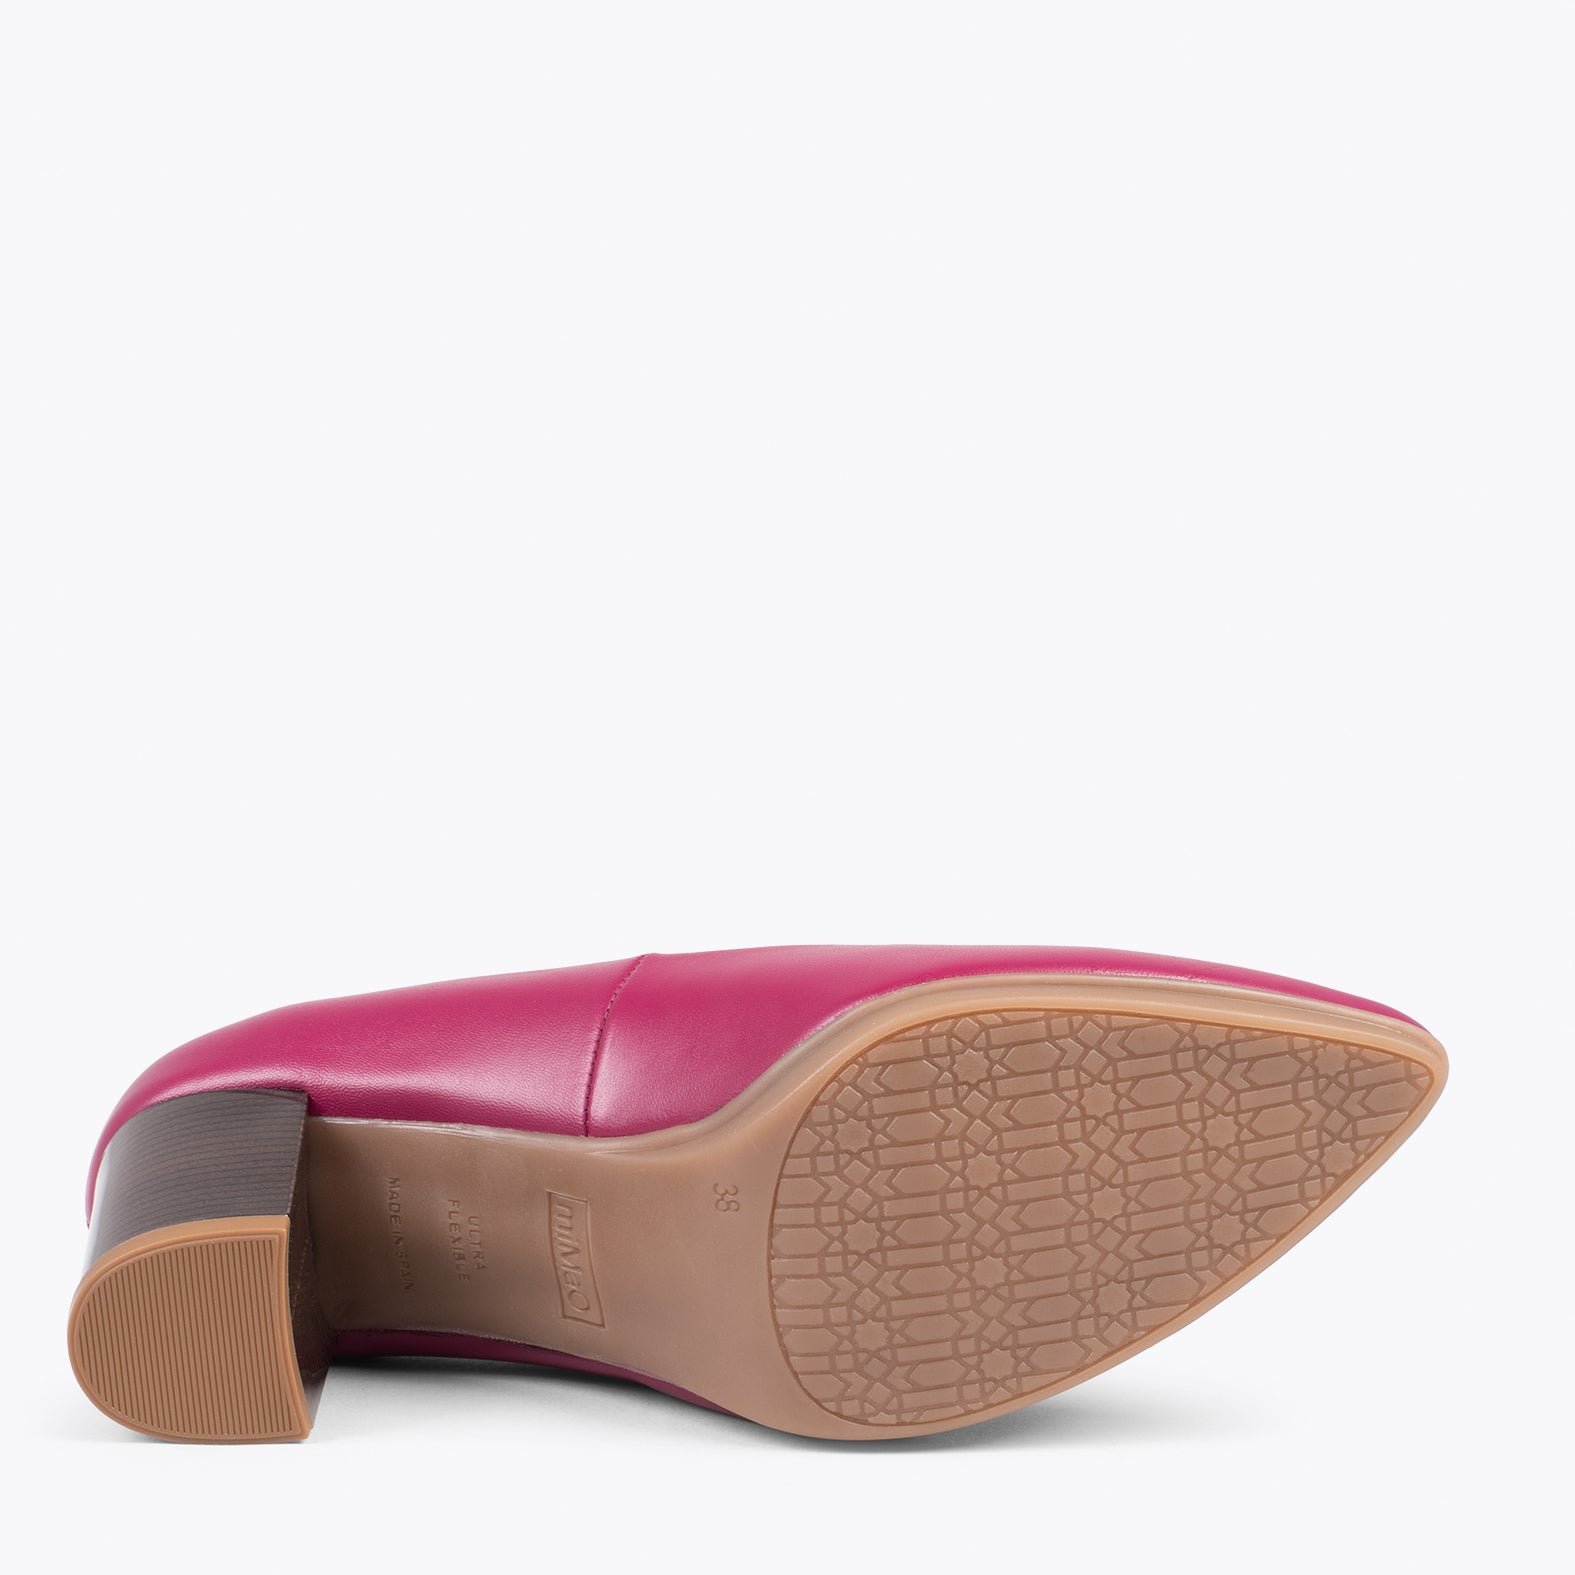 URBAN S SOIRÉE – Chaussures à talon moyen en cuir nappa BORDEAUX